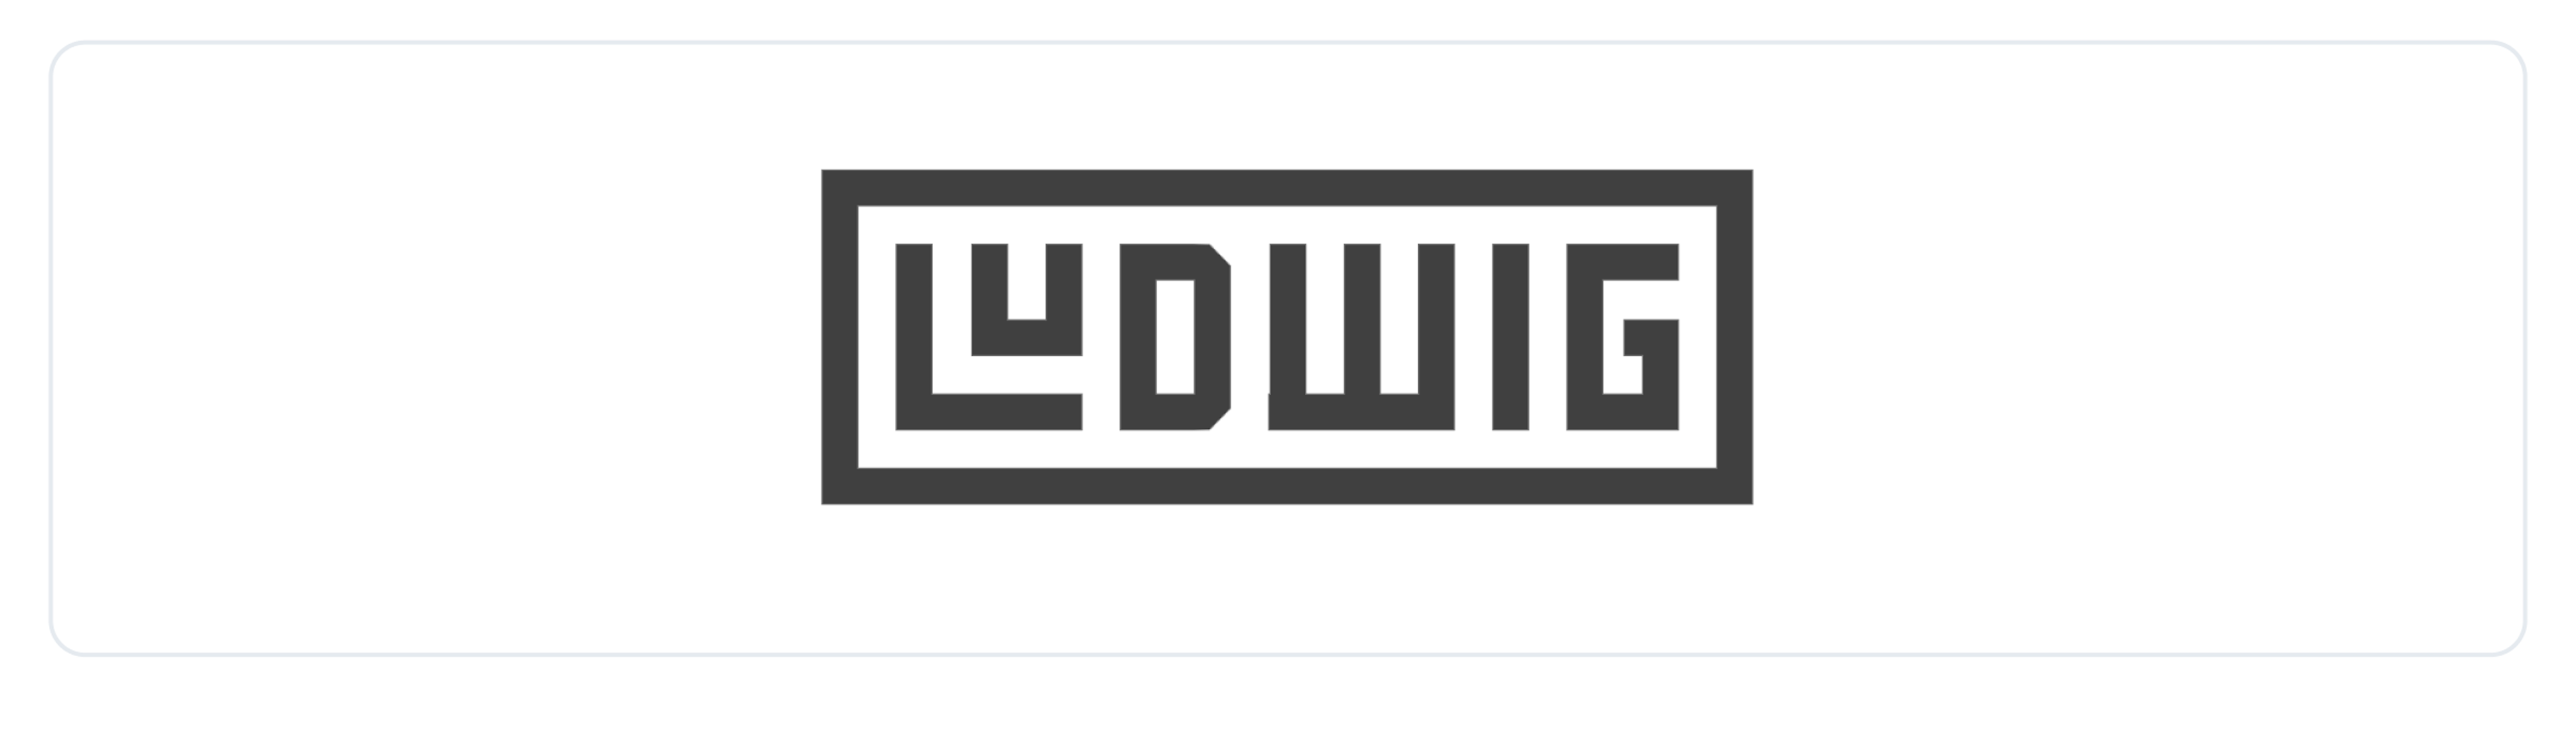 Ludwig logo.